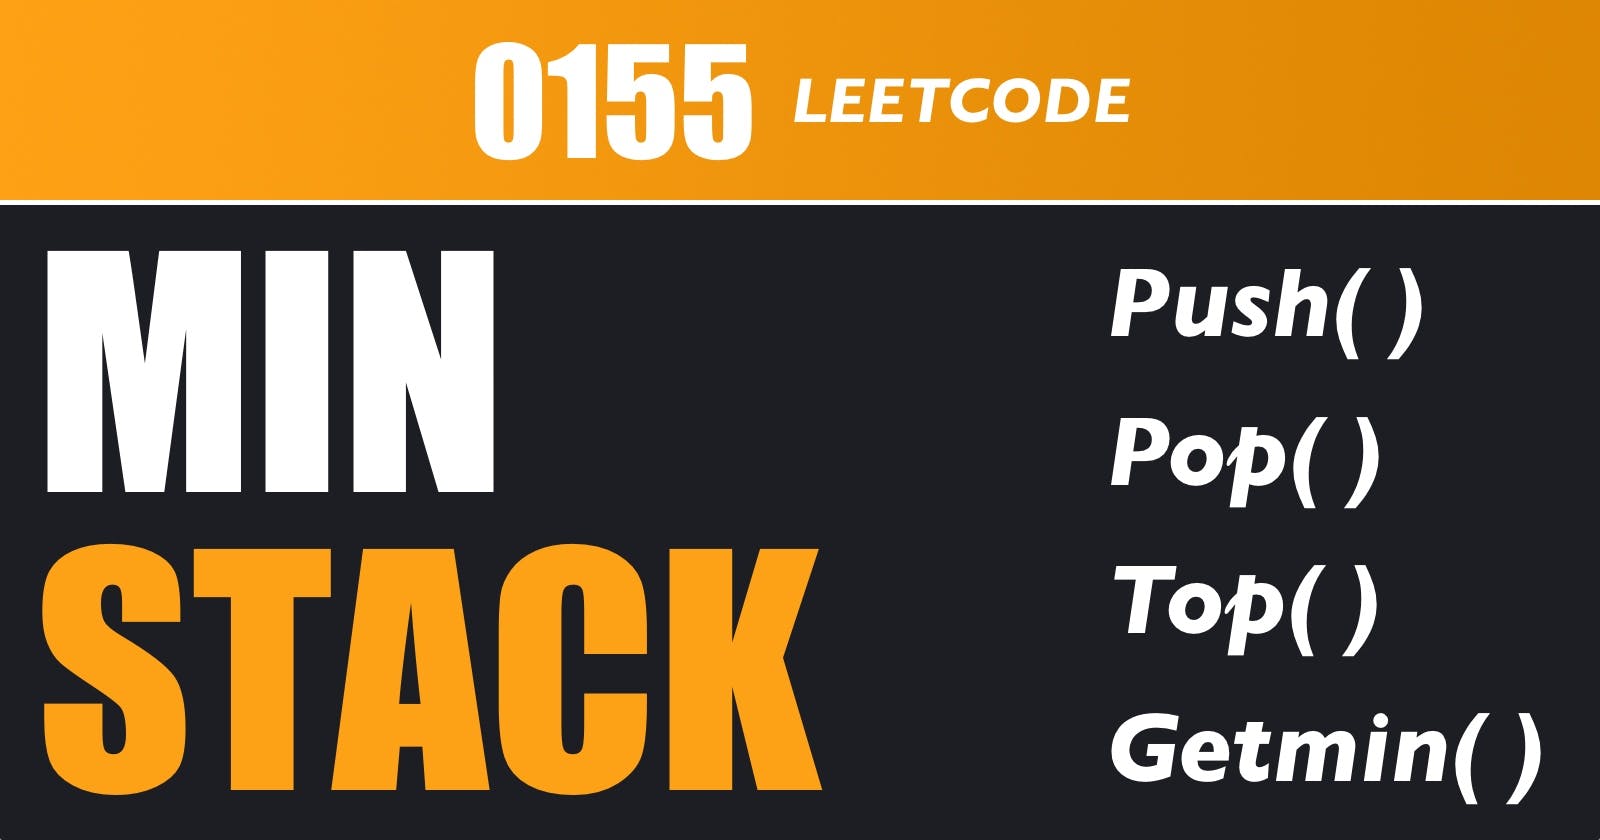 Min Stack - Leetcode 155